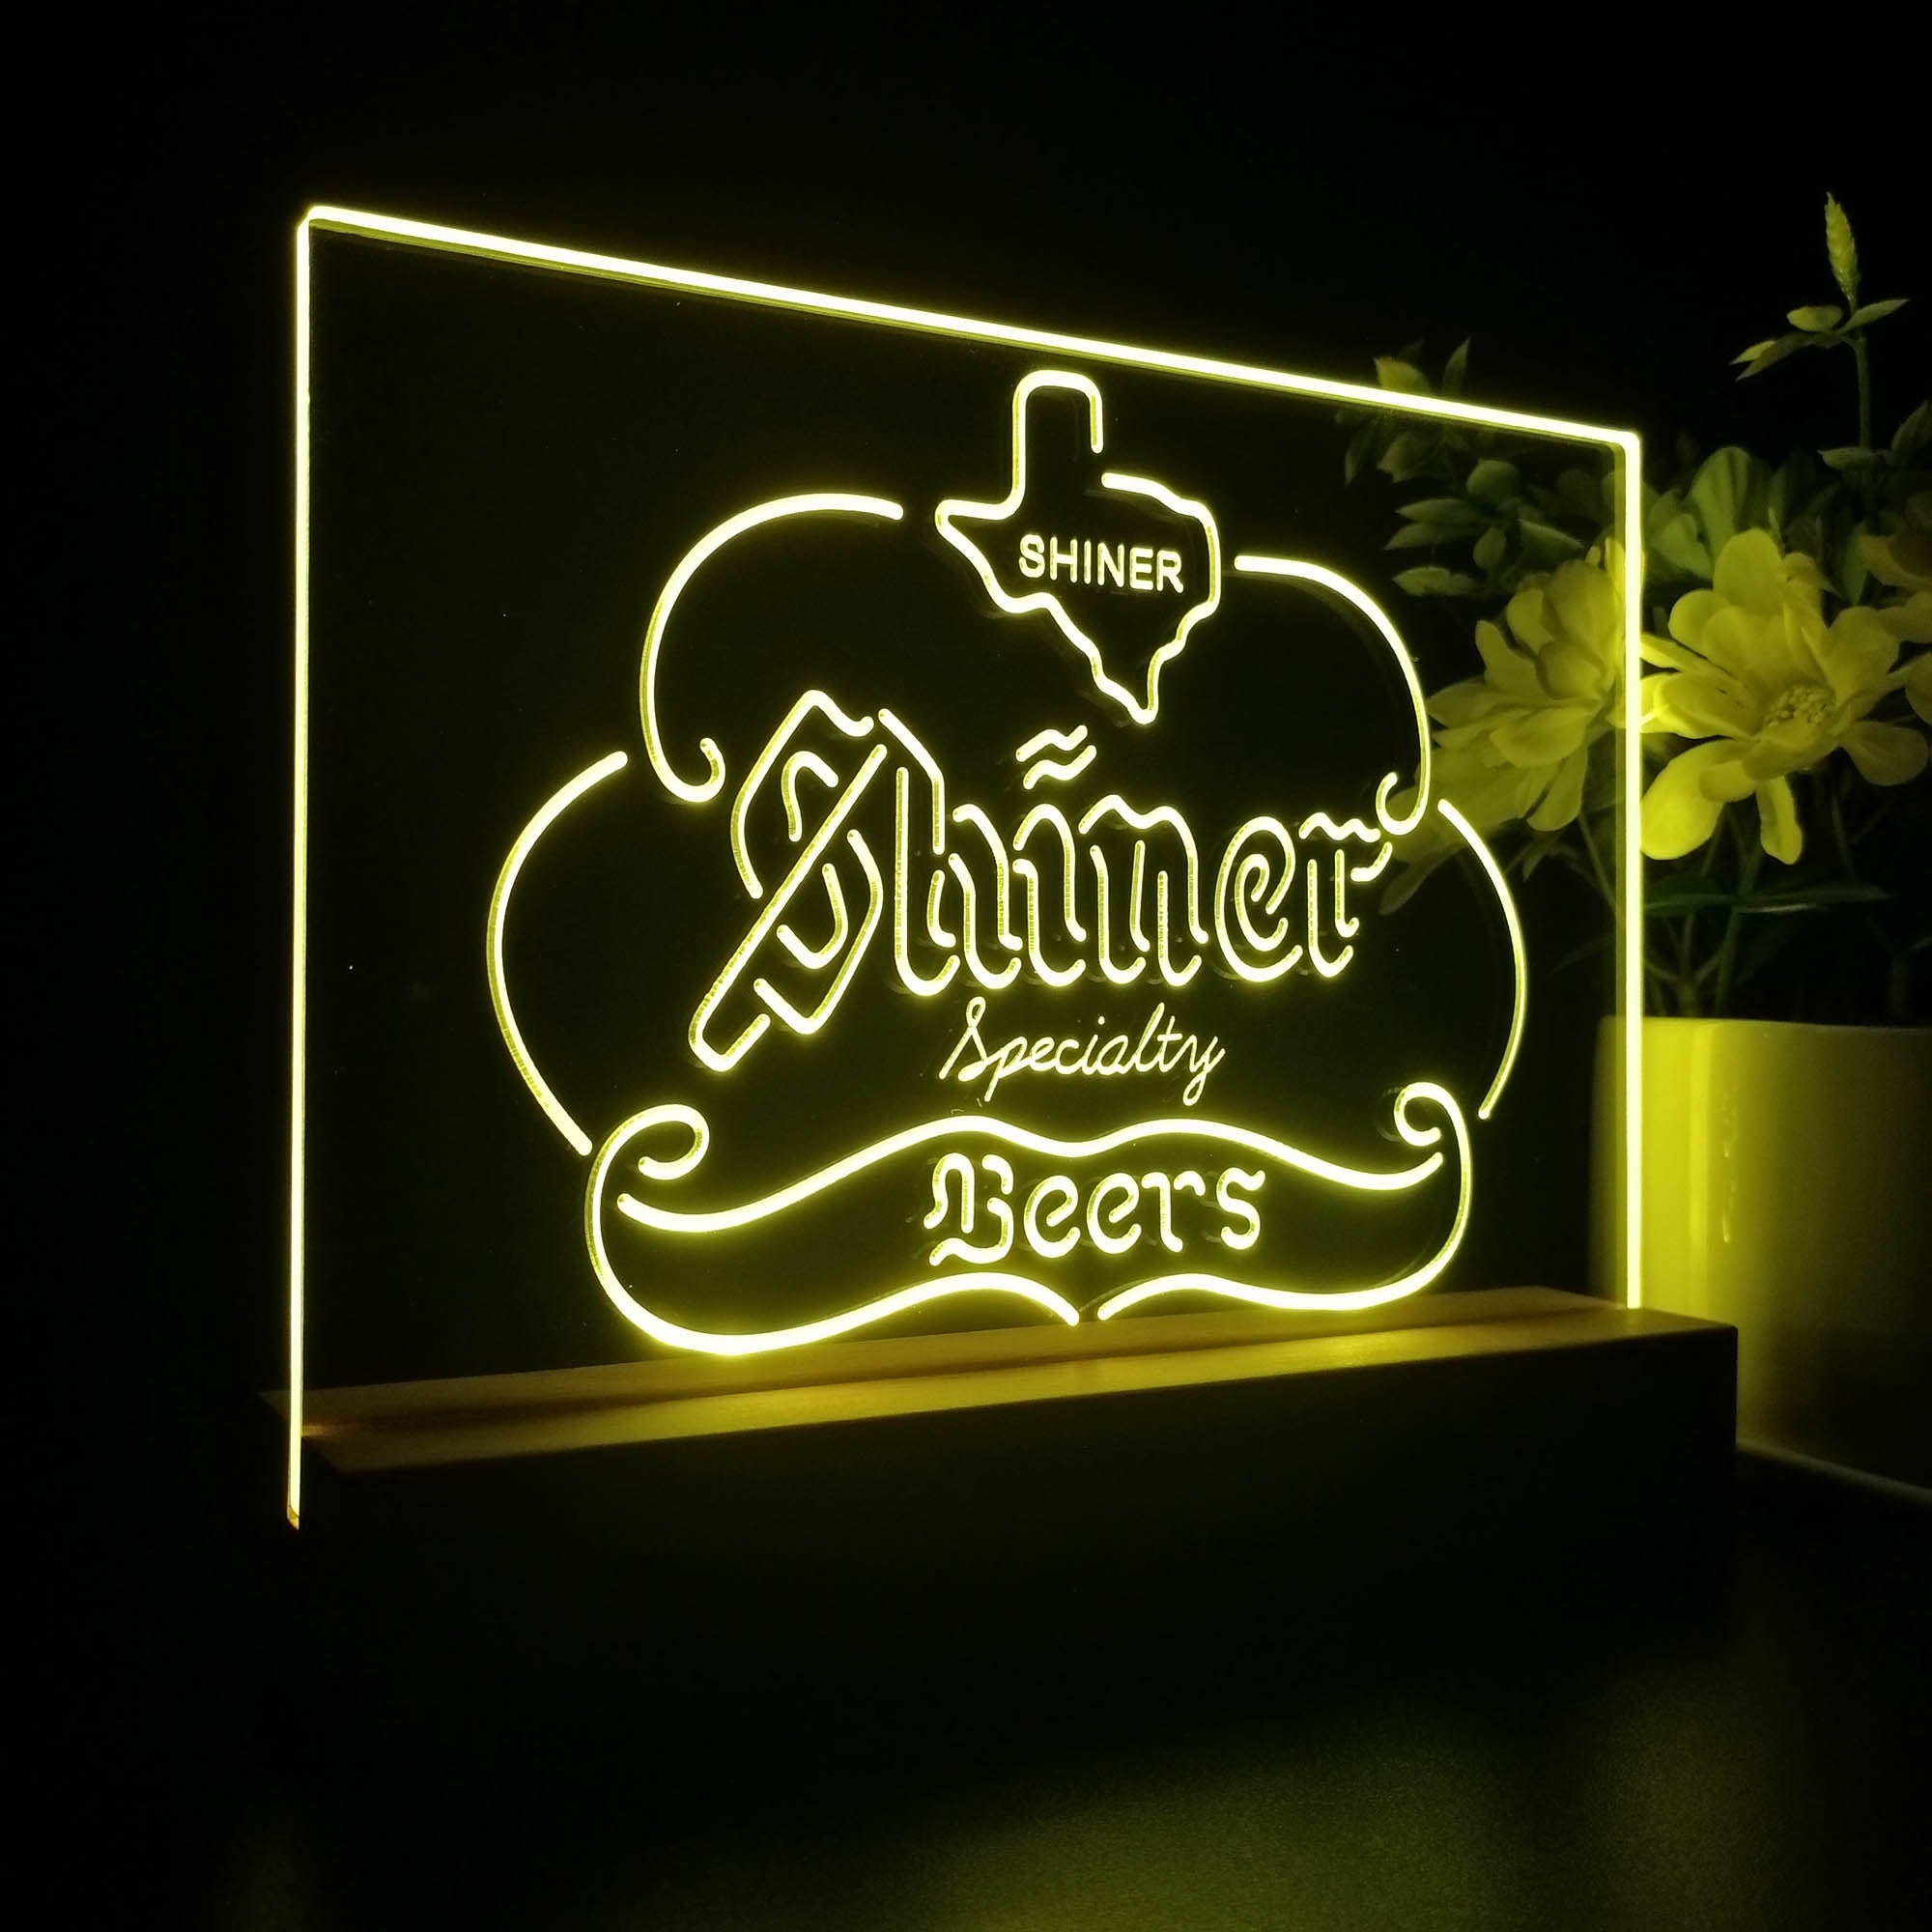 Shiner Beer Specialty Bar Night Light LED Sign